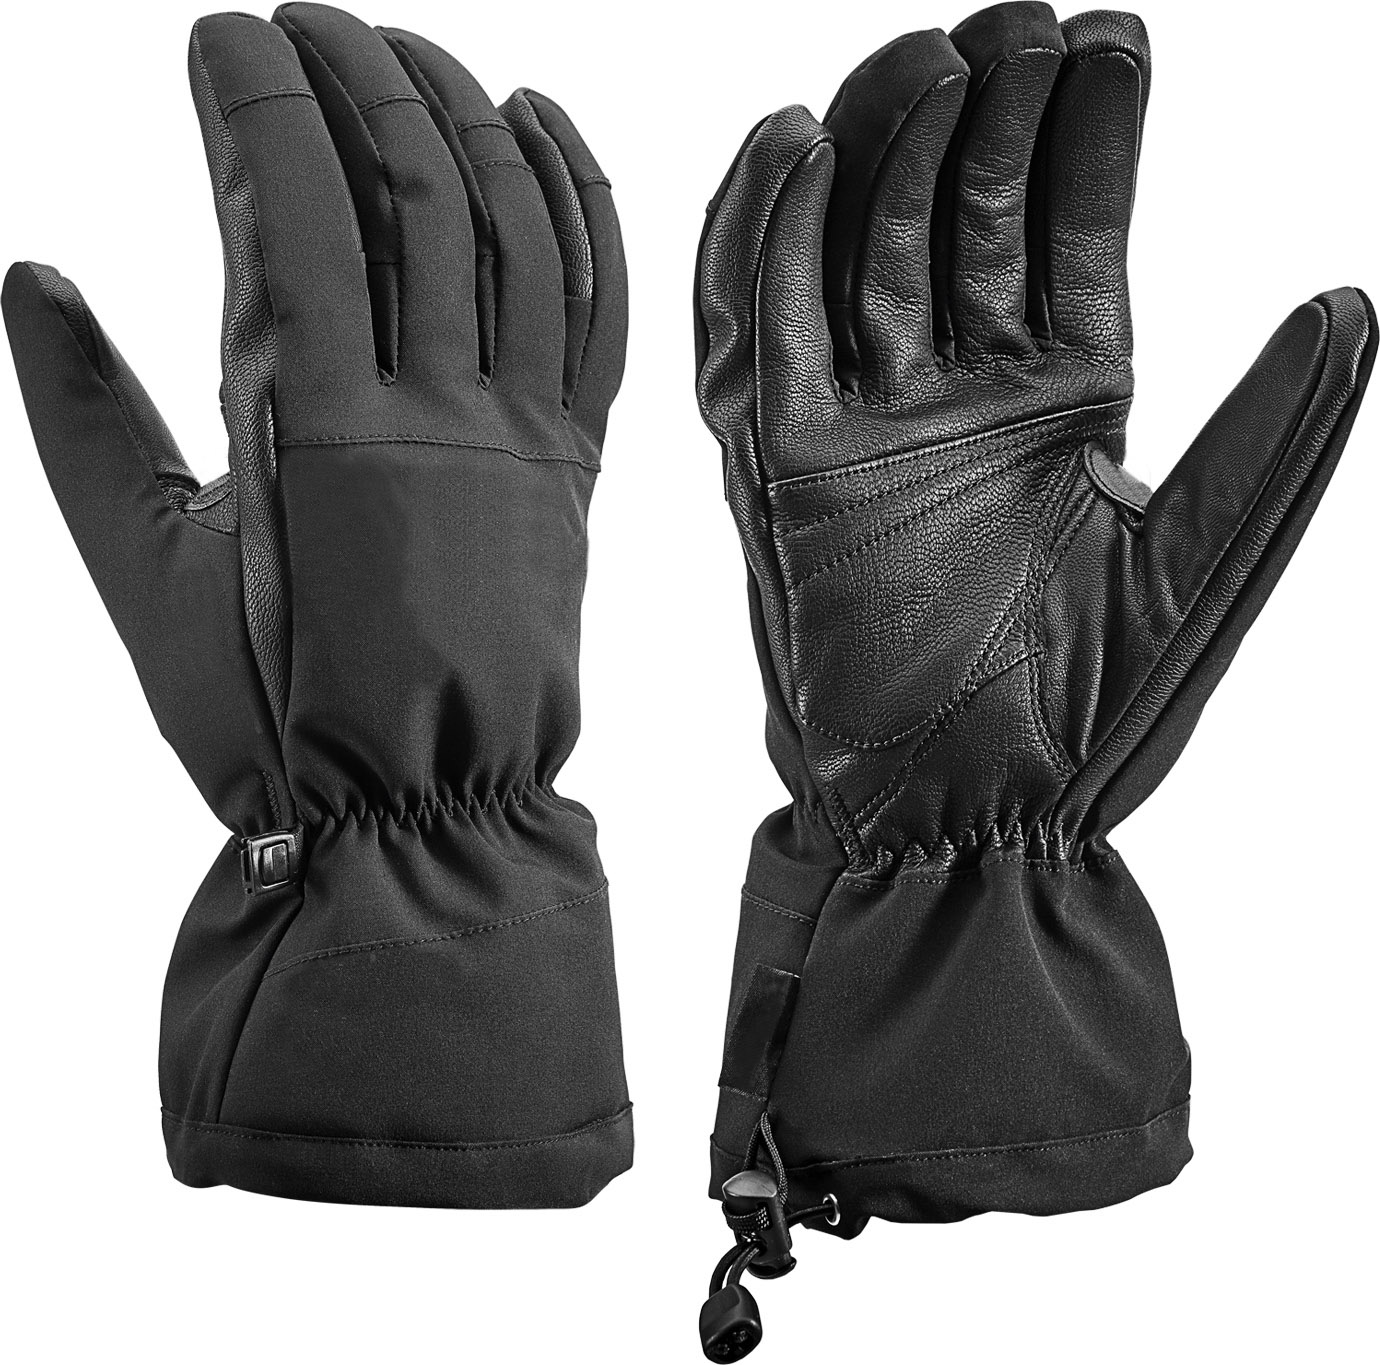 Cheap Waterproof best sale black Ski Gloves winter snowboarding gloves